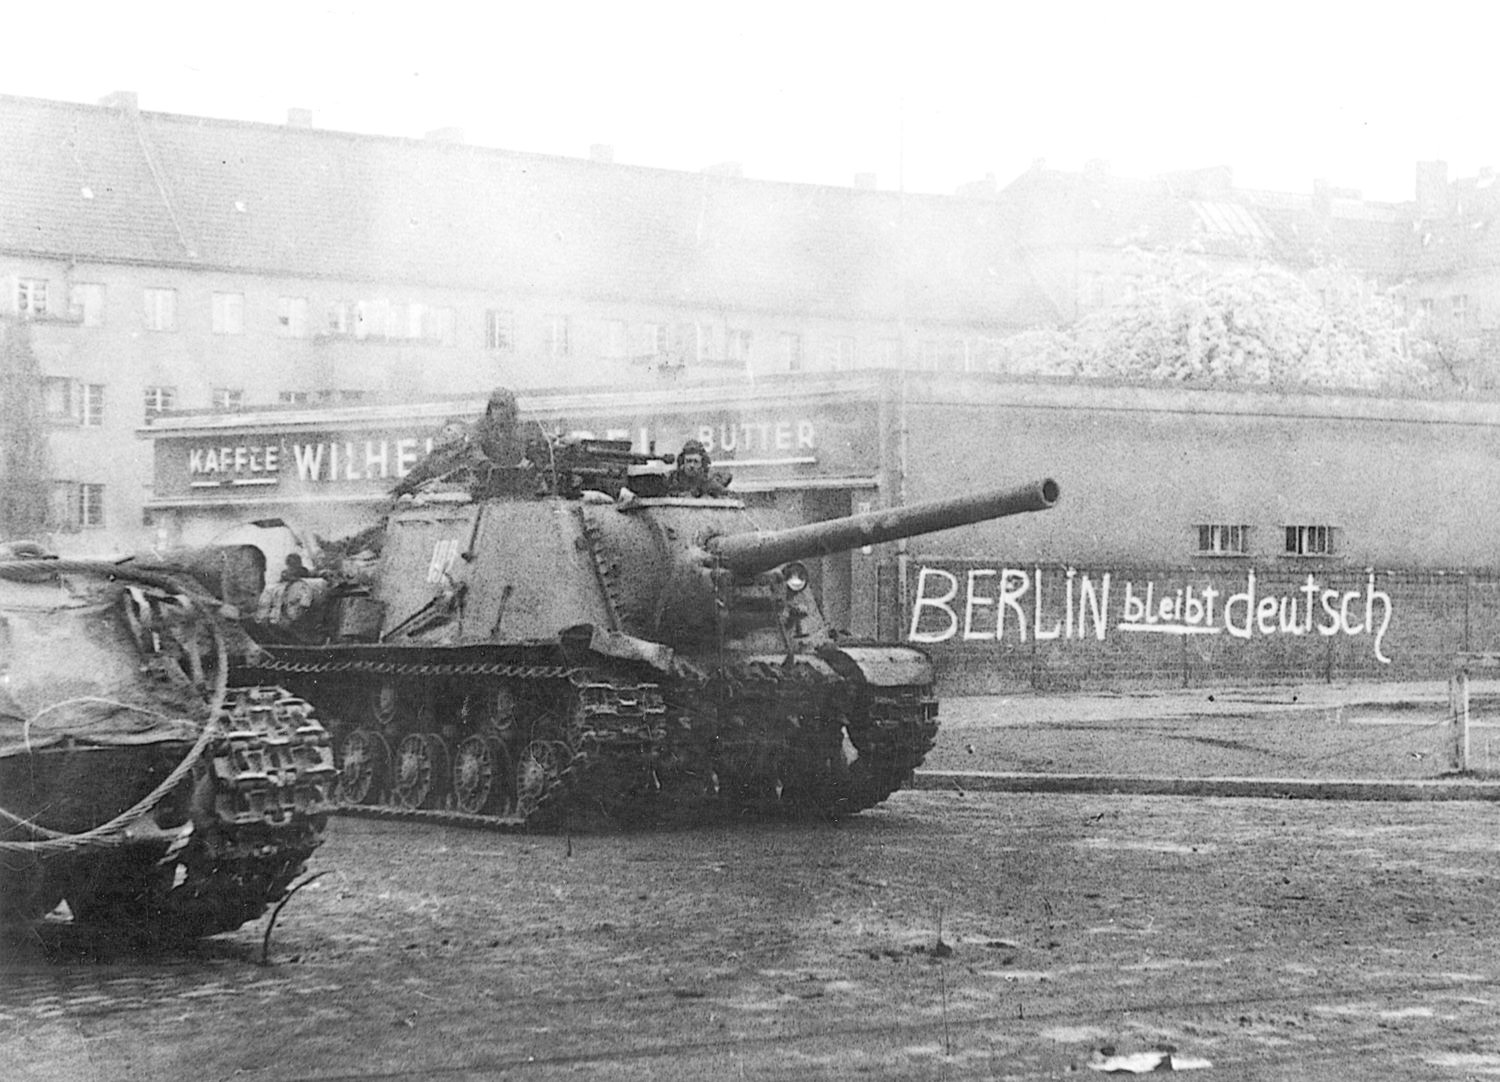 Soviet tanks advance through Berlin. The graffiti on the wall reads “Berlin Forever German.”